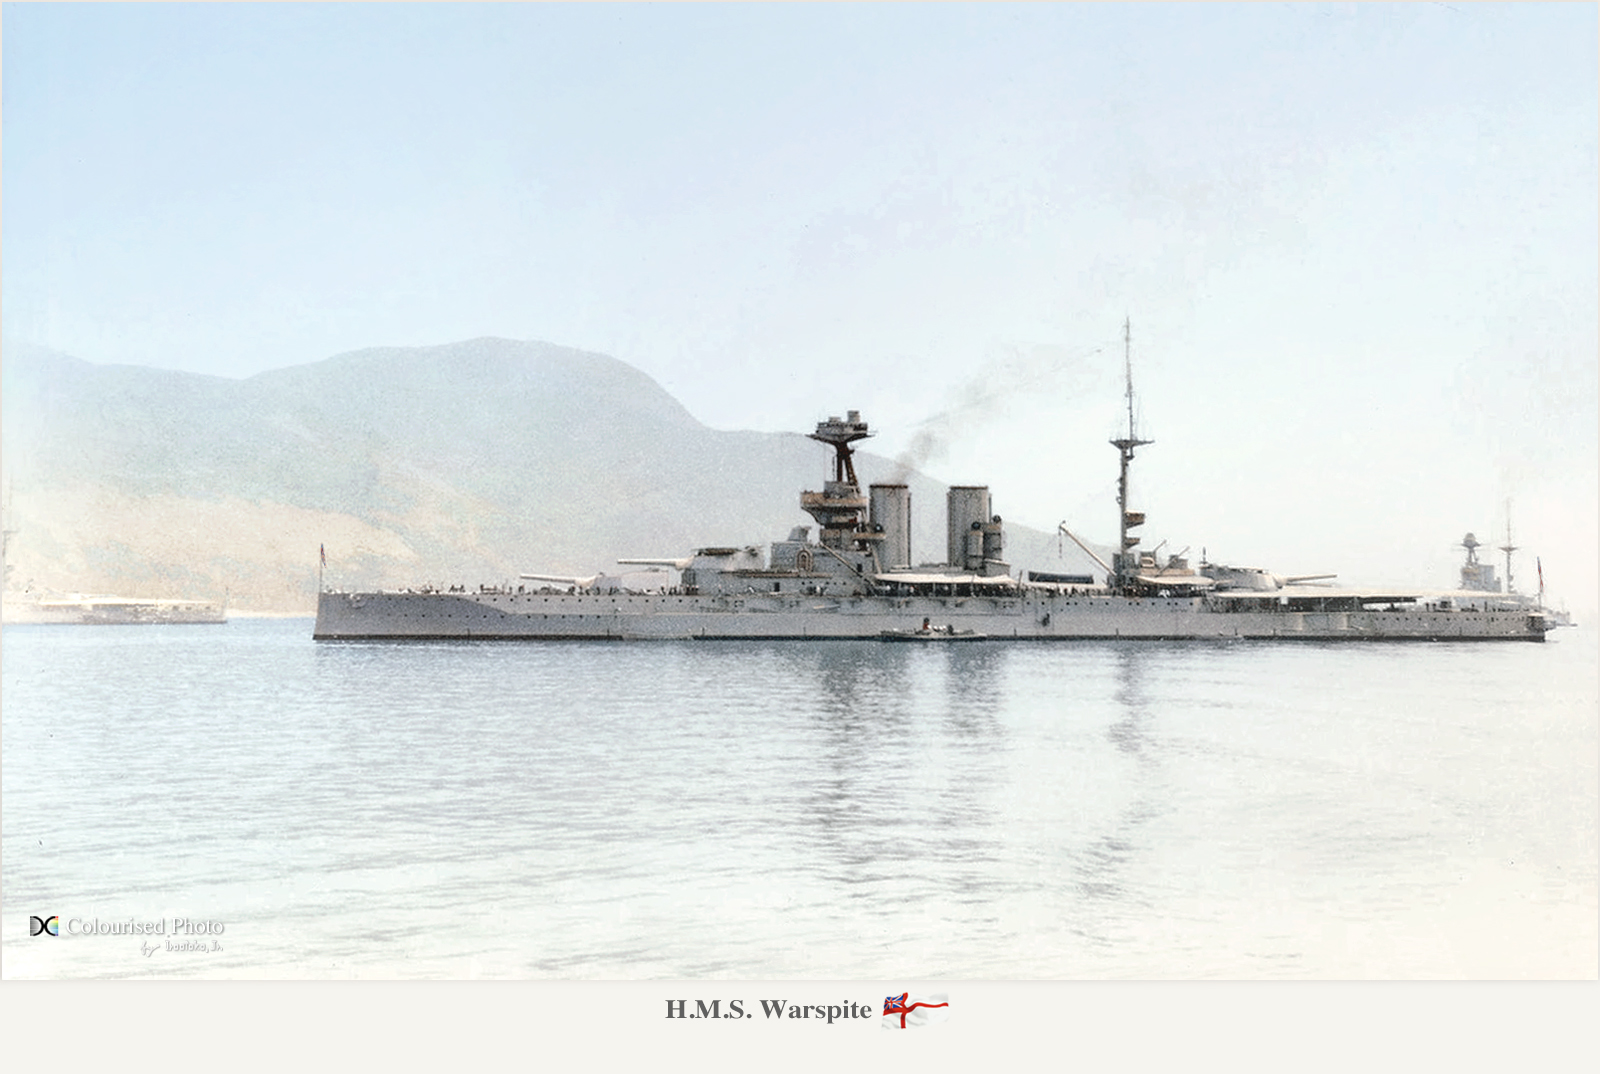 HMS Warspite in the Mediterranean, 1919 - colorized by irootoko Jr.